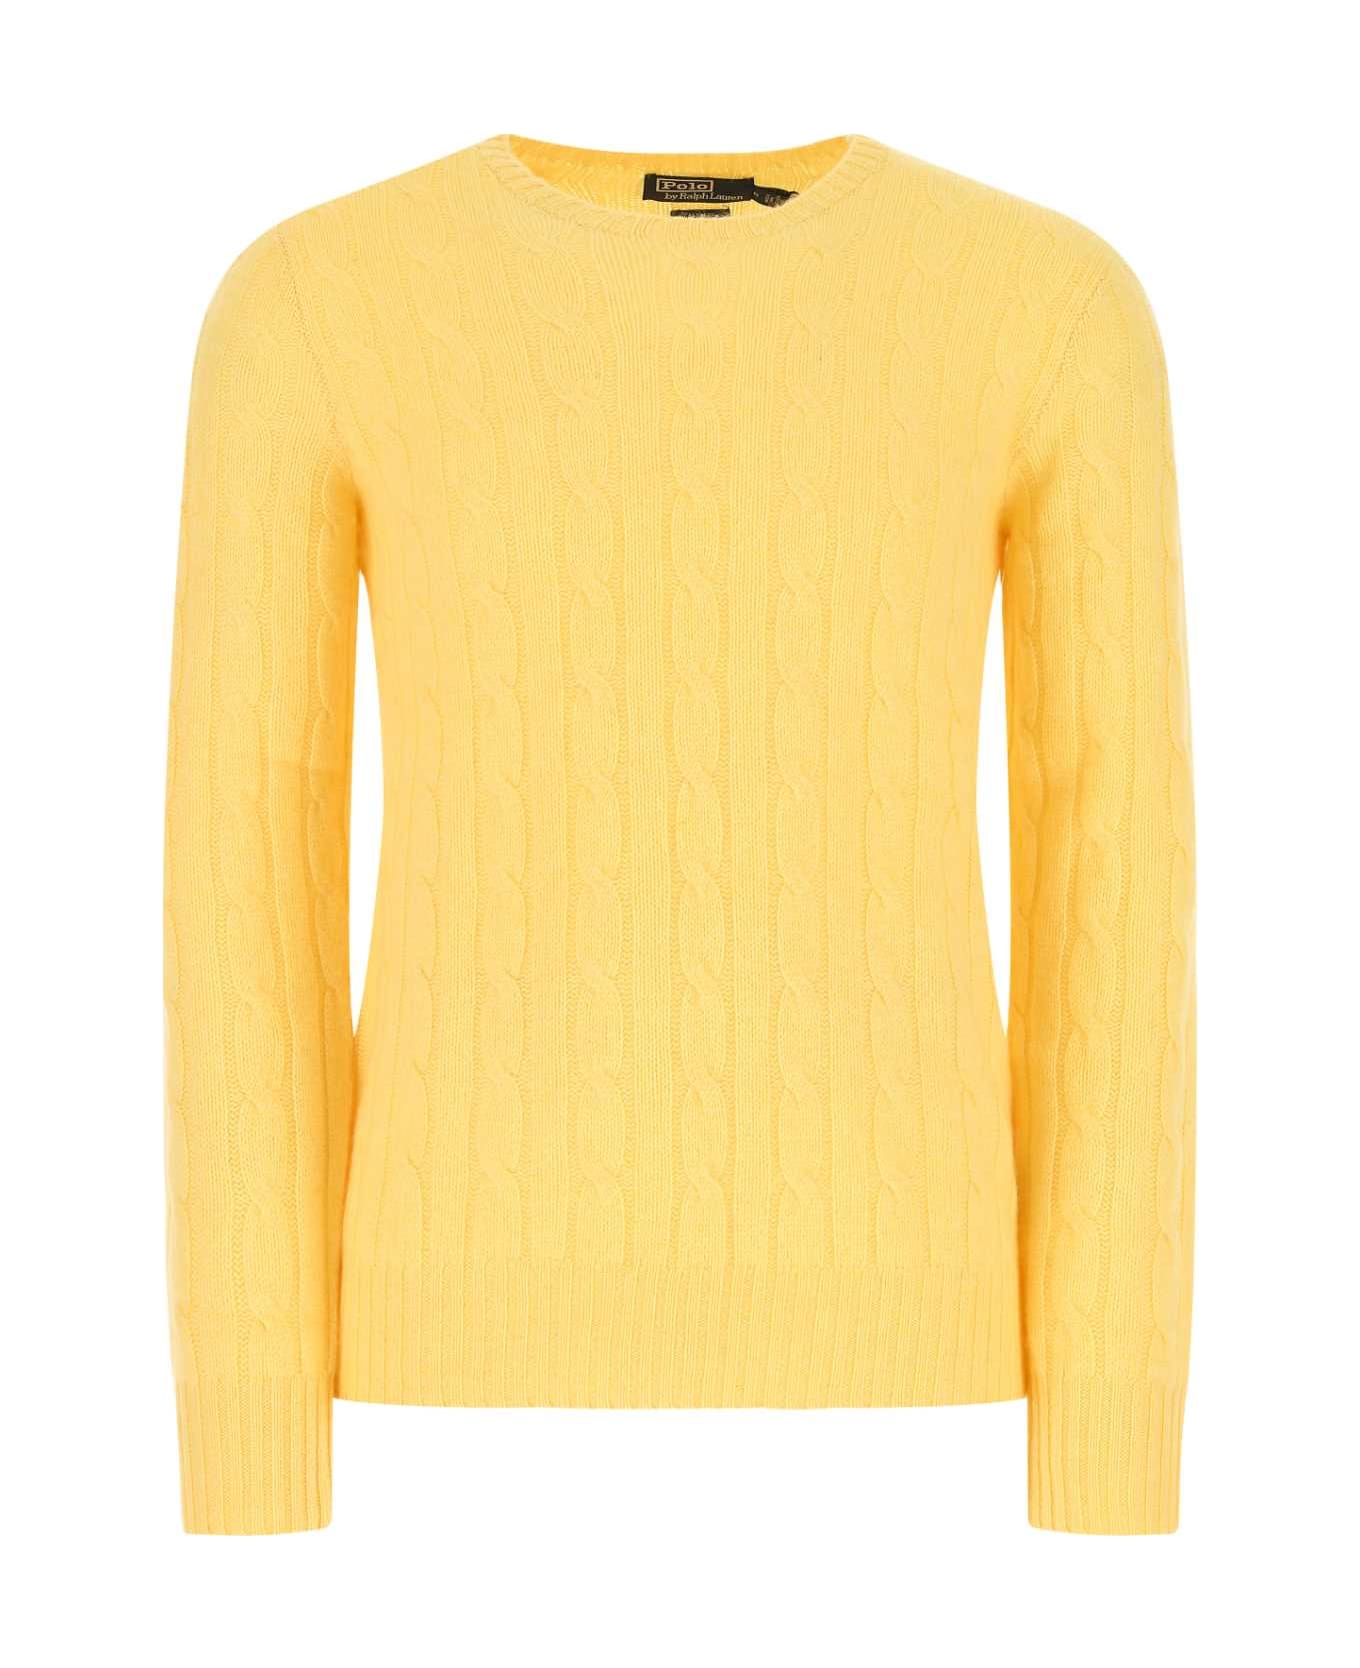 Polo Ralph Lauren Yellow Cashmere Sweater - 002